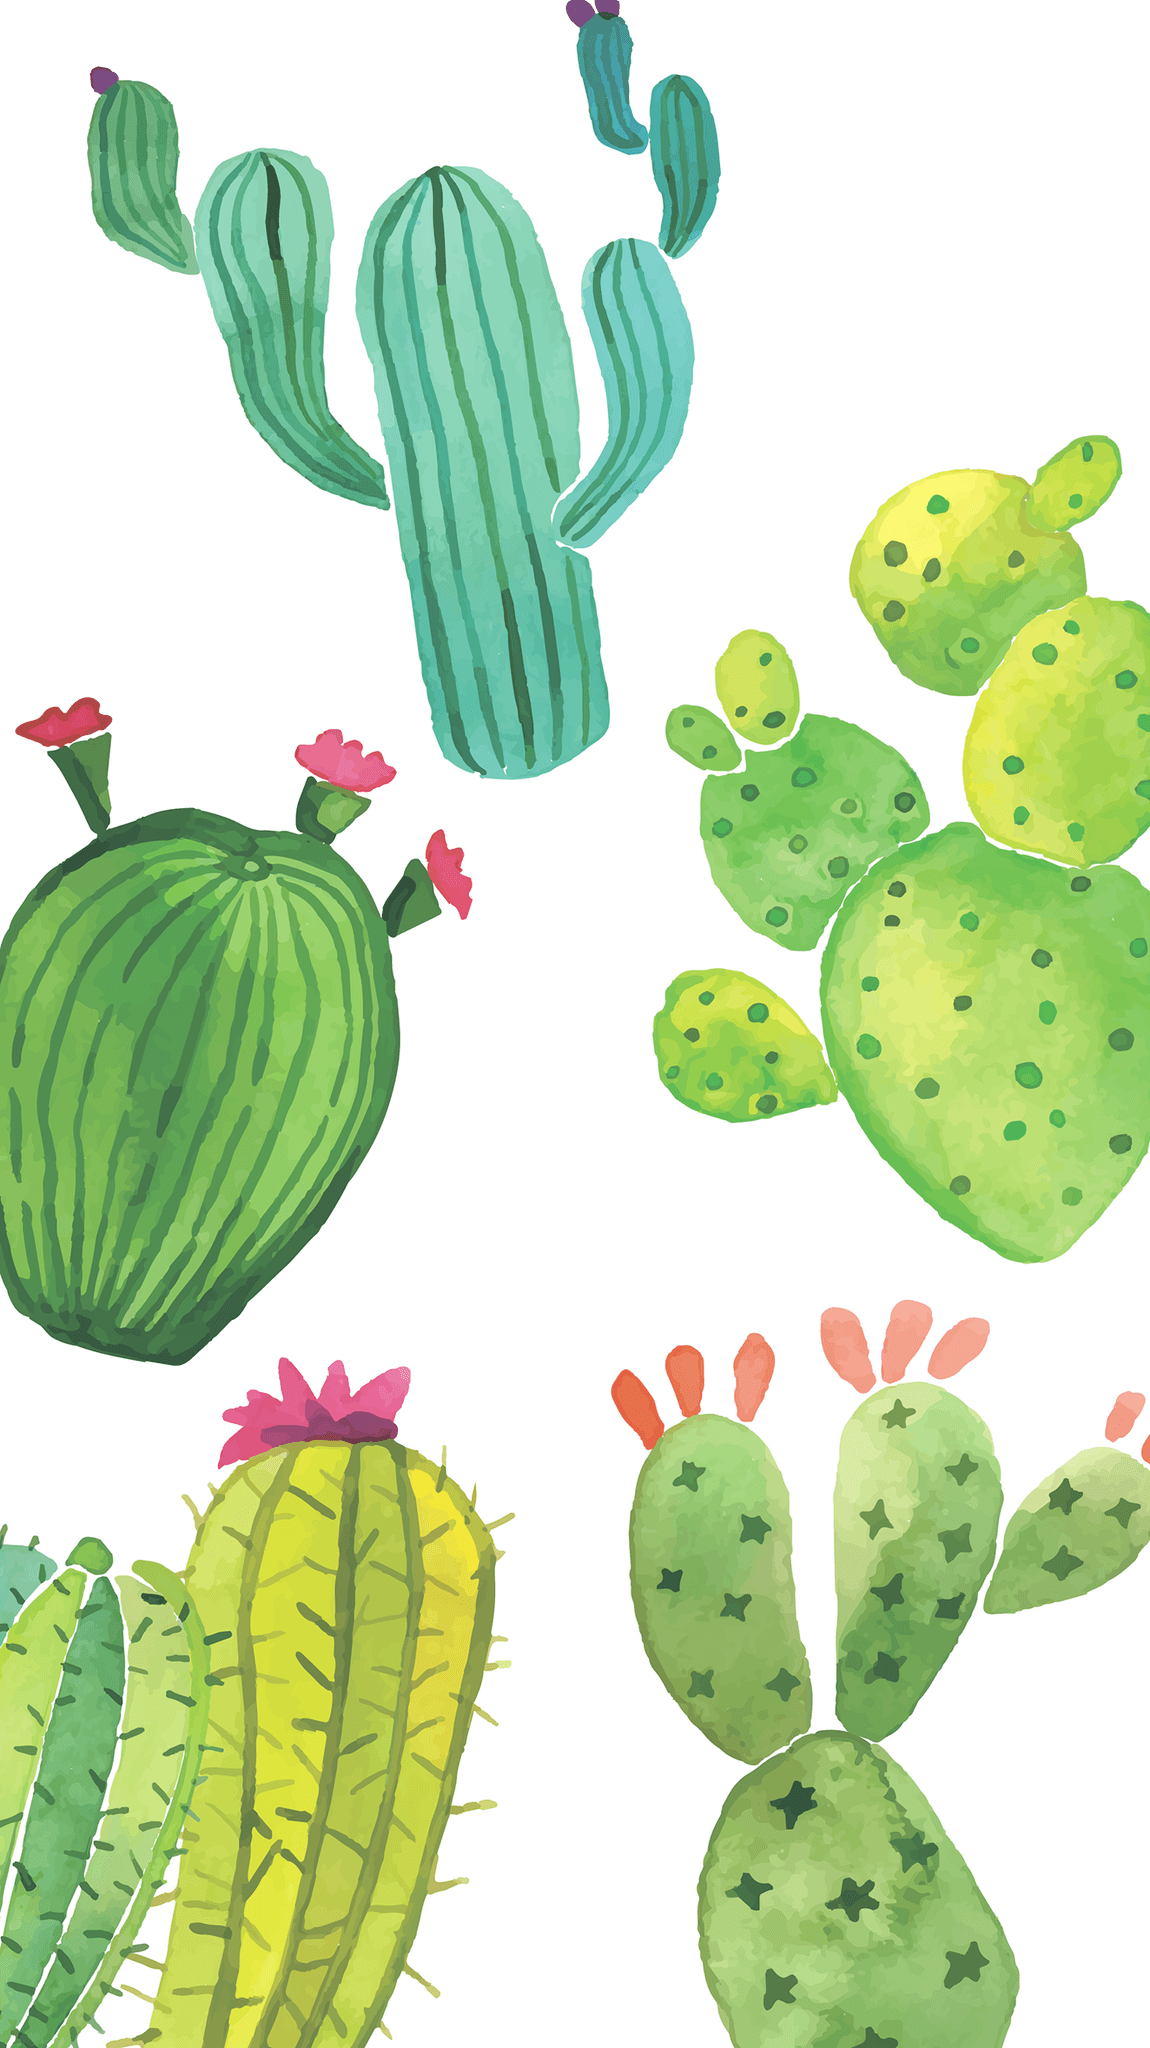 Cactus Cartoon Wallpapers - Wallpaper Cave